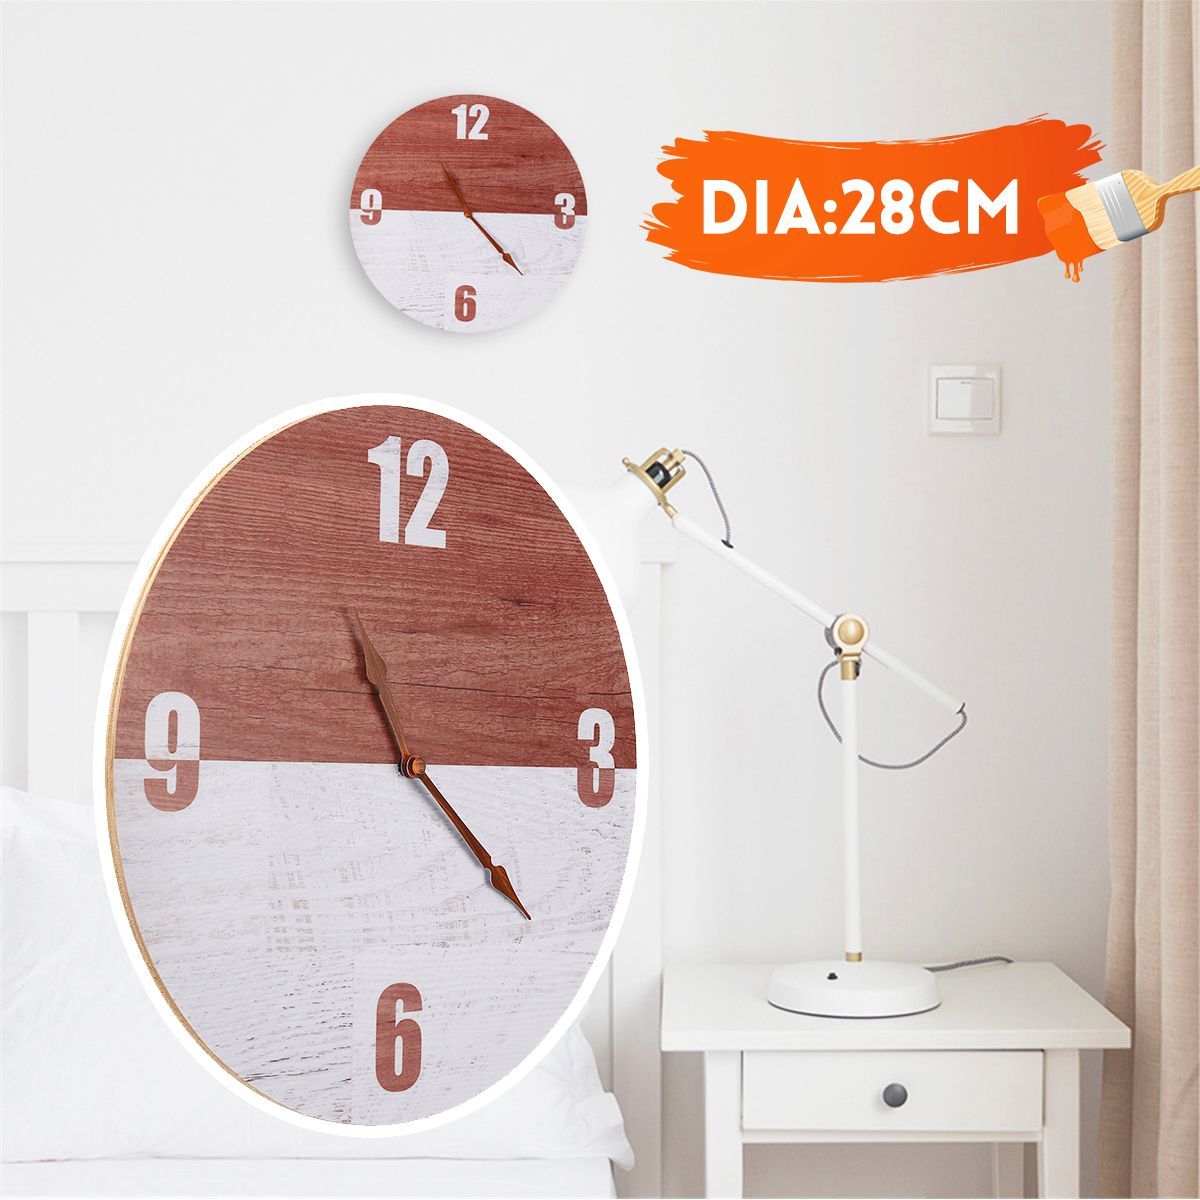 11-DIY-Digital-Wood-Wall-Clock-Diameter-28CM-Seamless-Hook-For-Home-Office-Bar-1485108